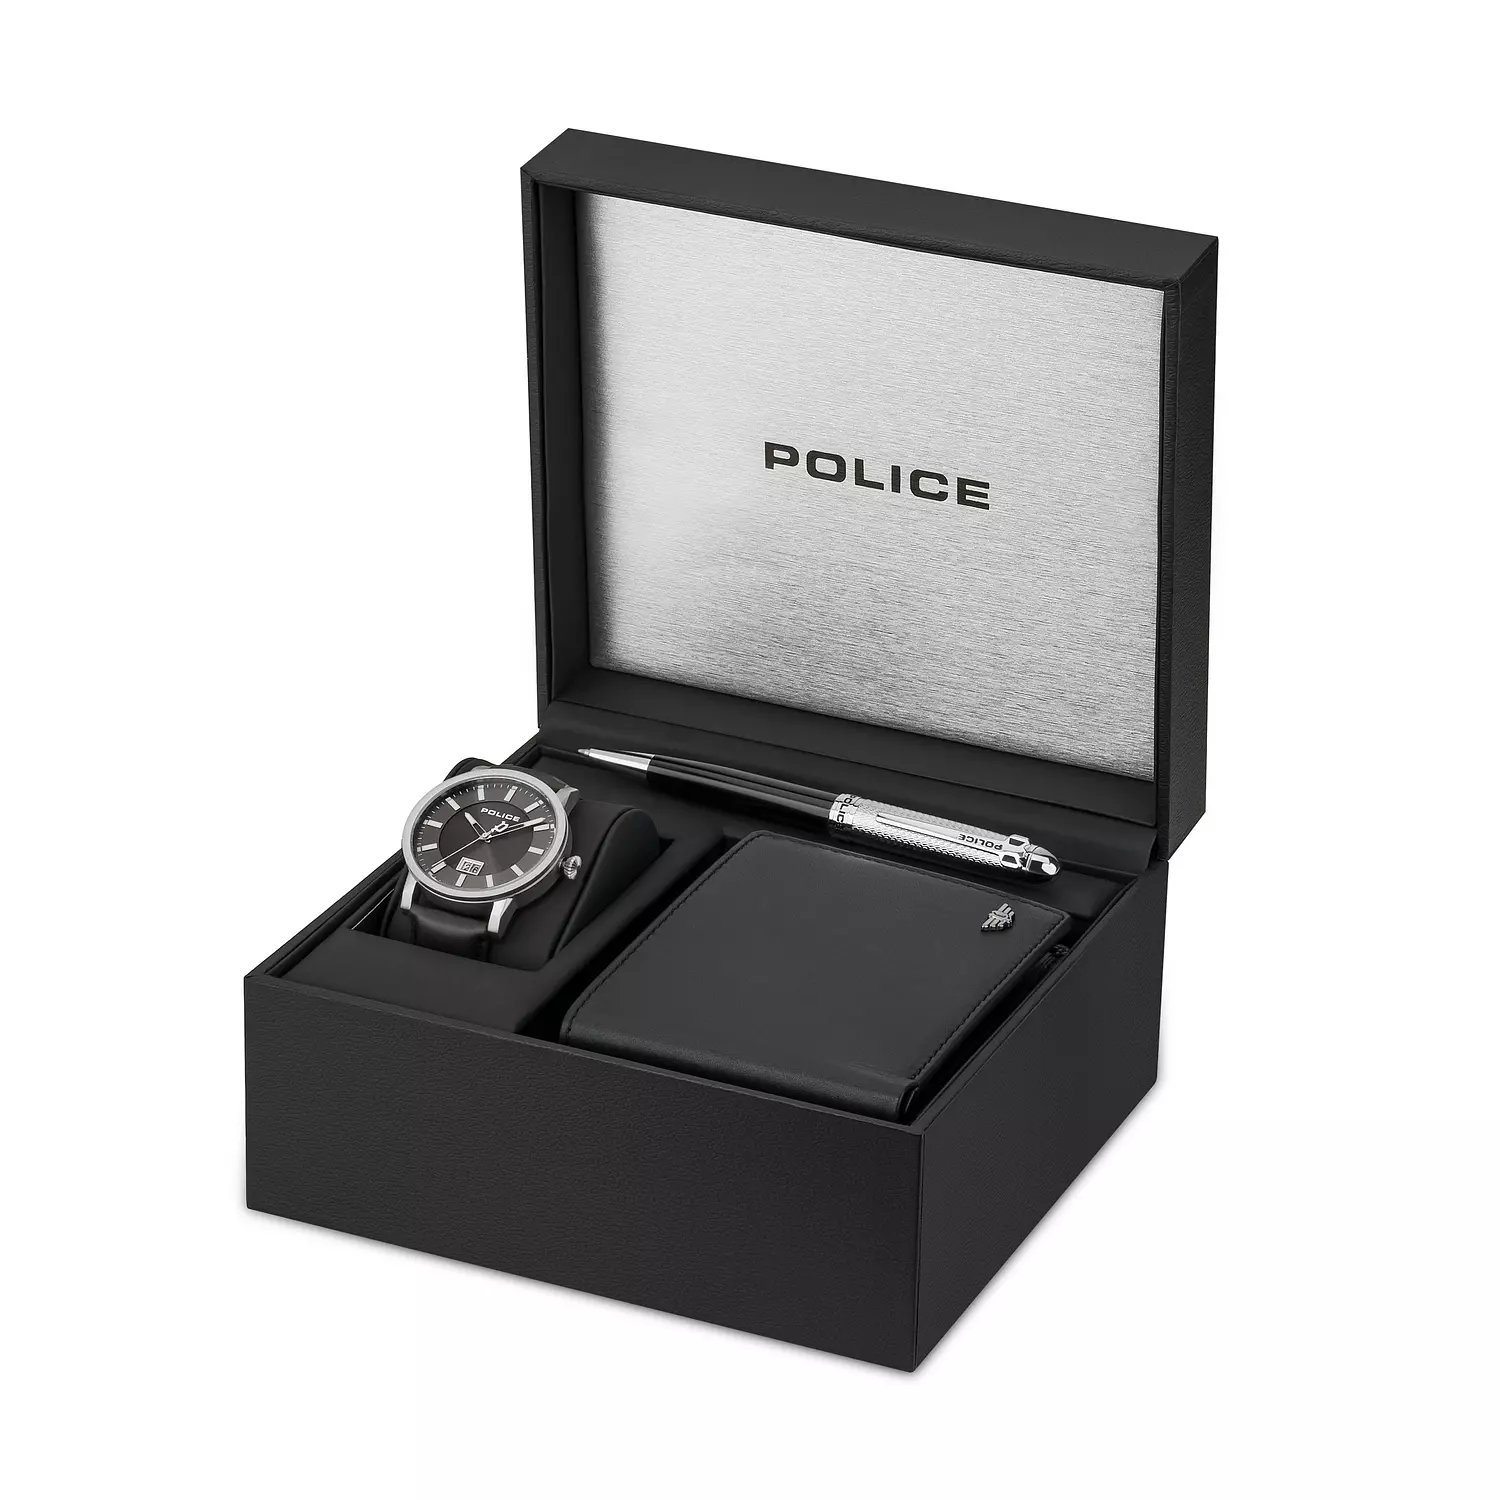 Police Set Box For Men, Watch, Wallet, Pen hover image